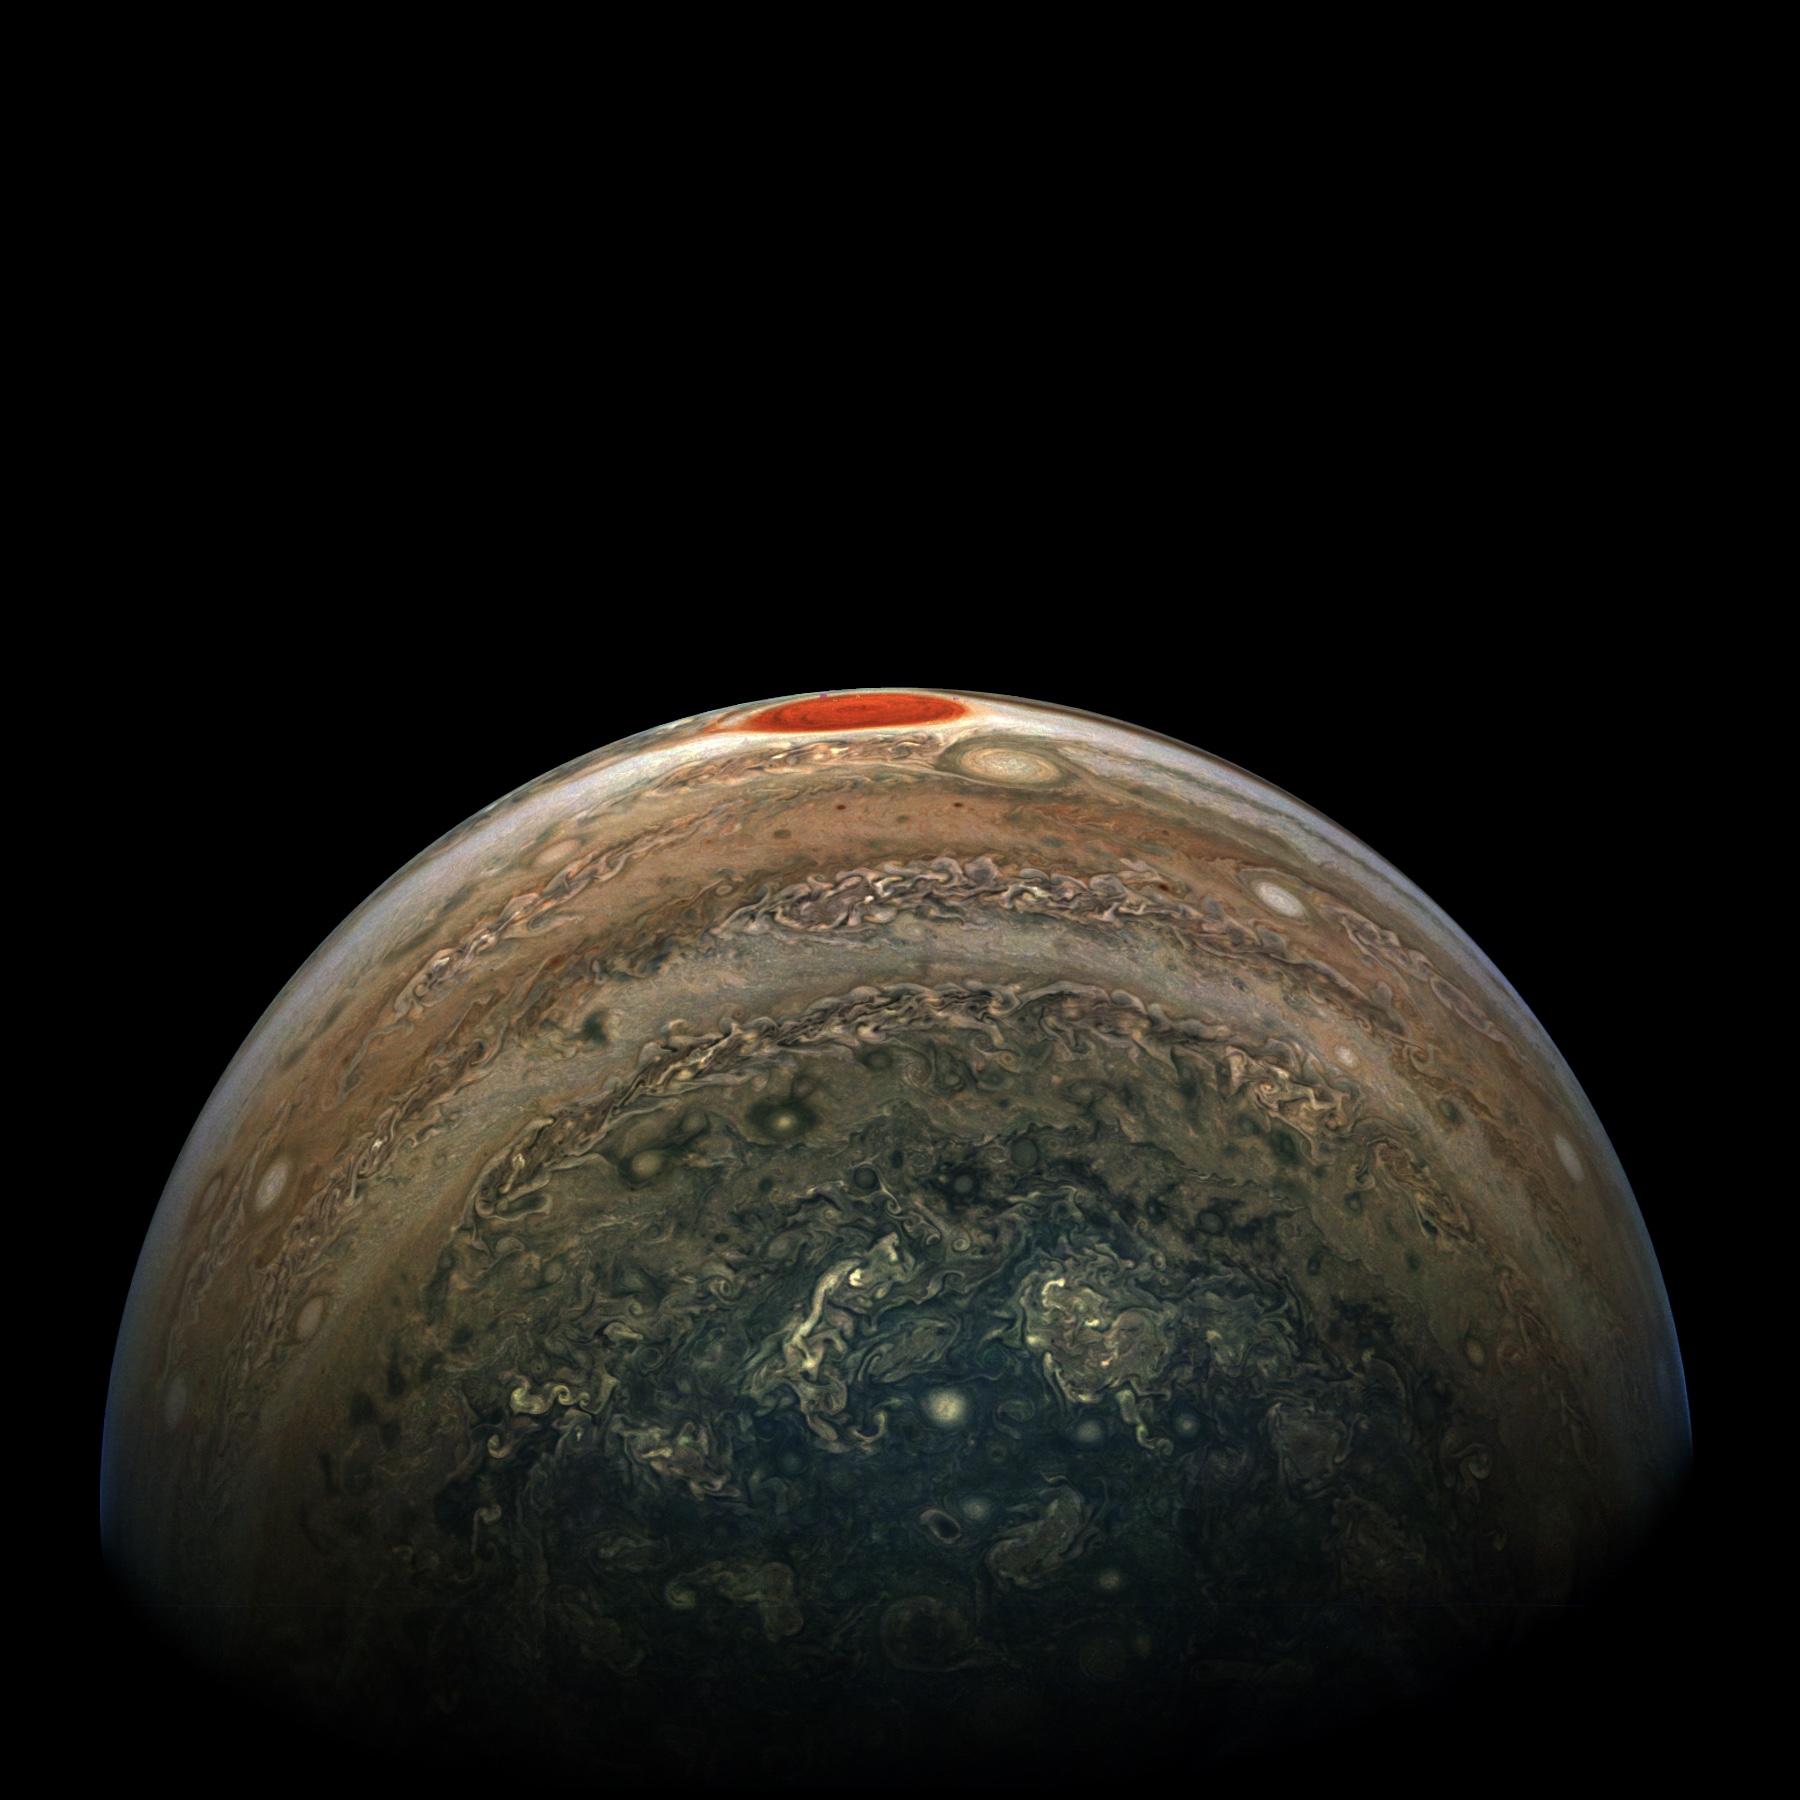 NASA's Juno spacecraft captured this view of Jupiter's red spot